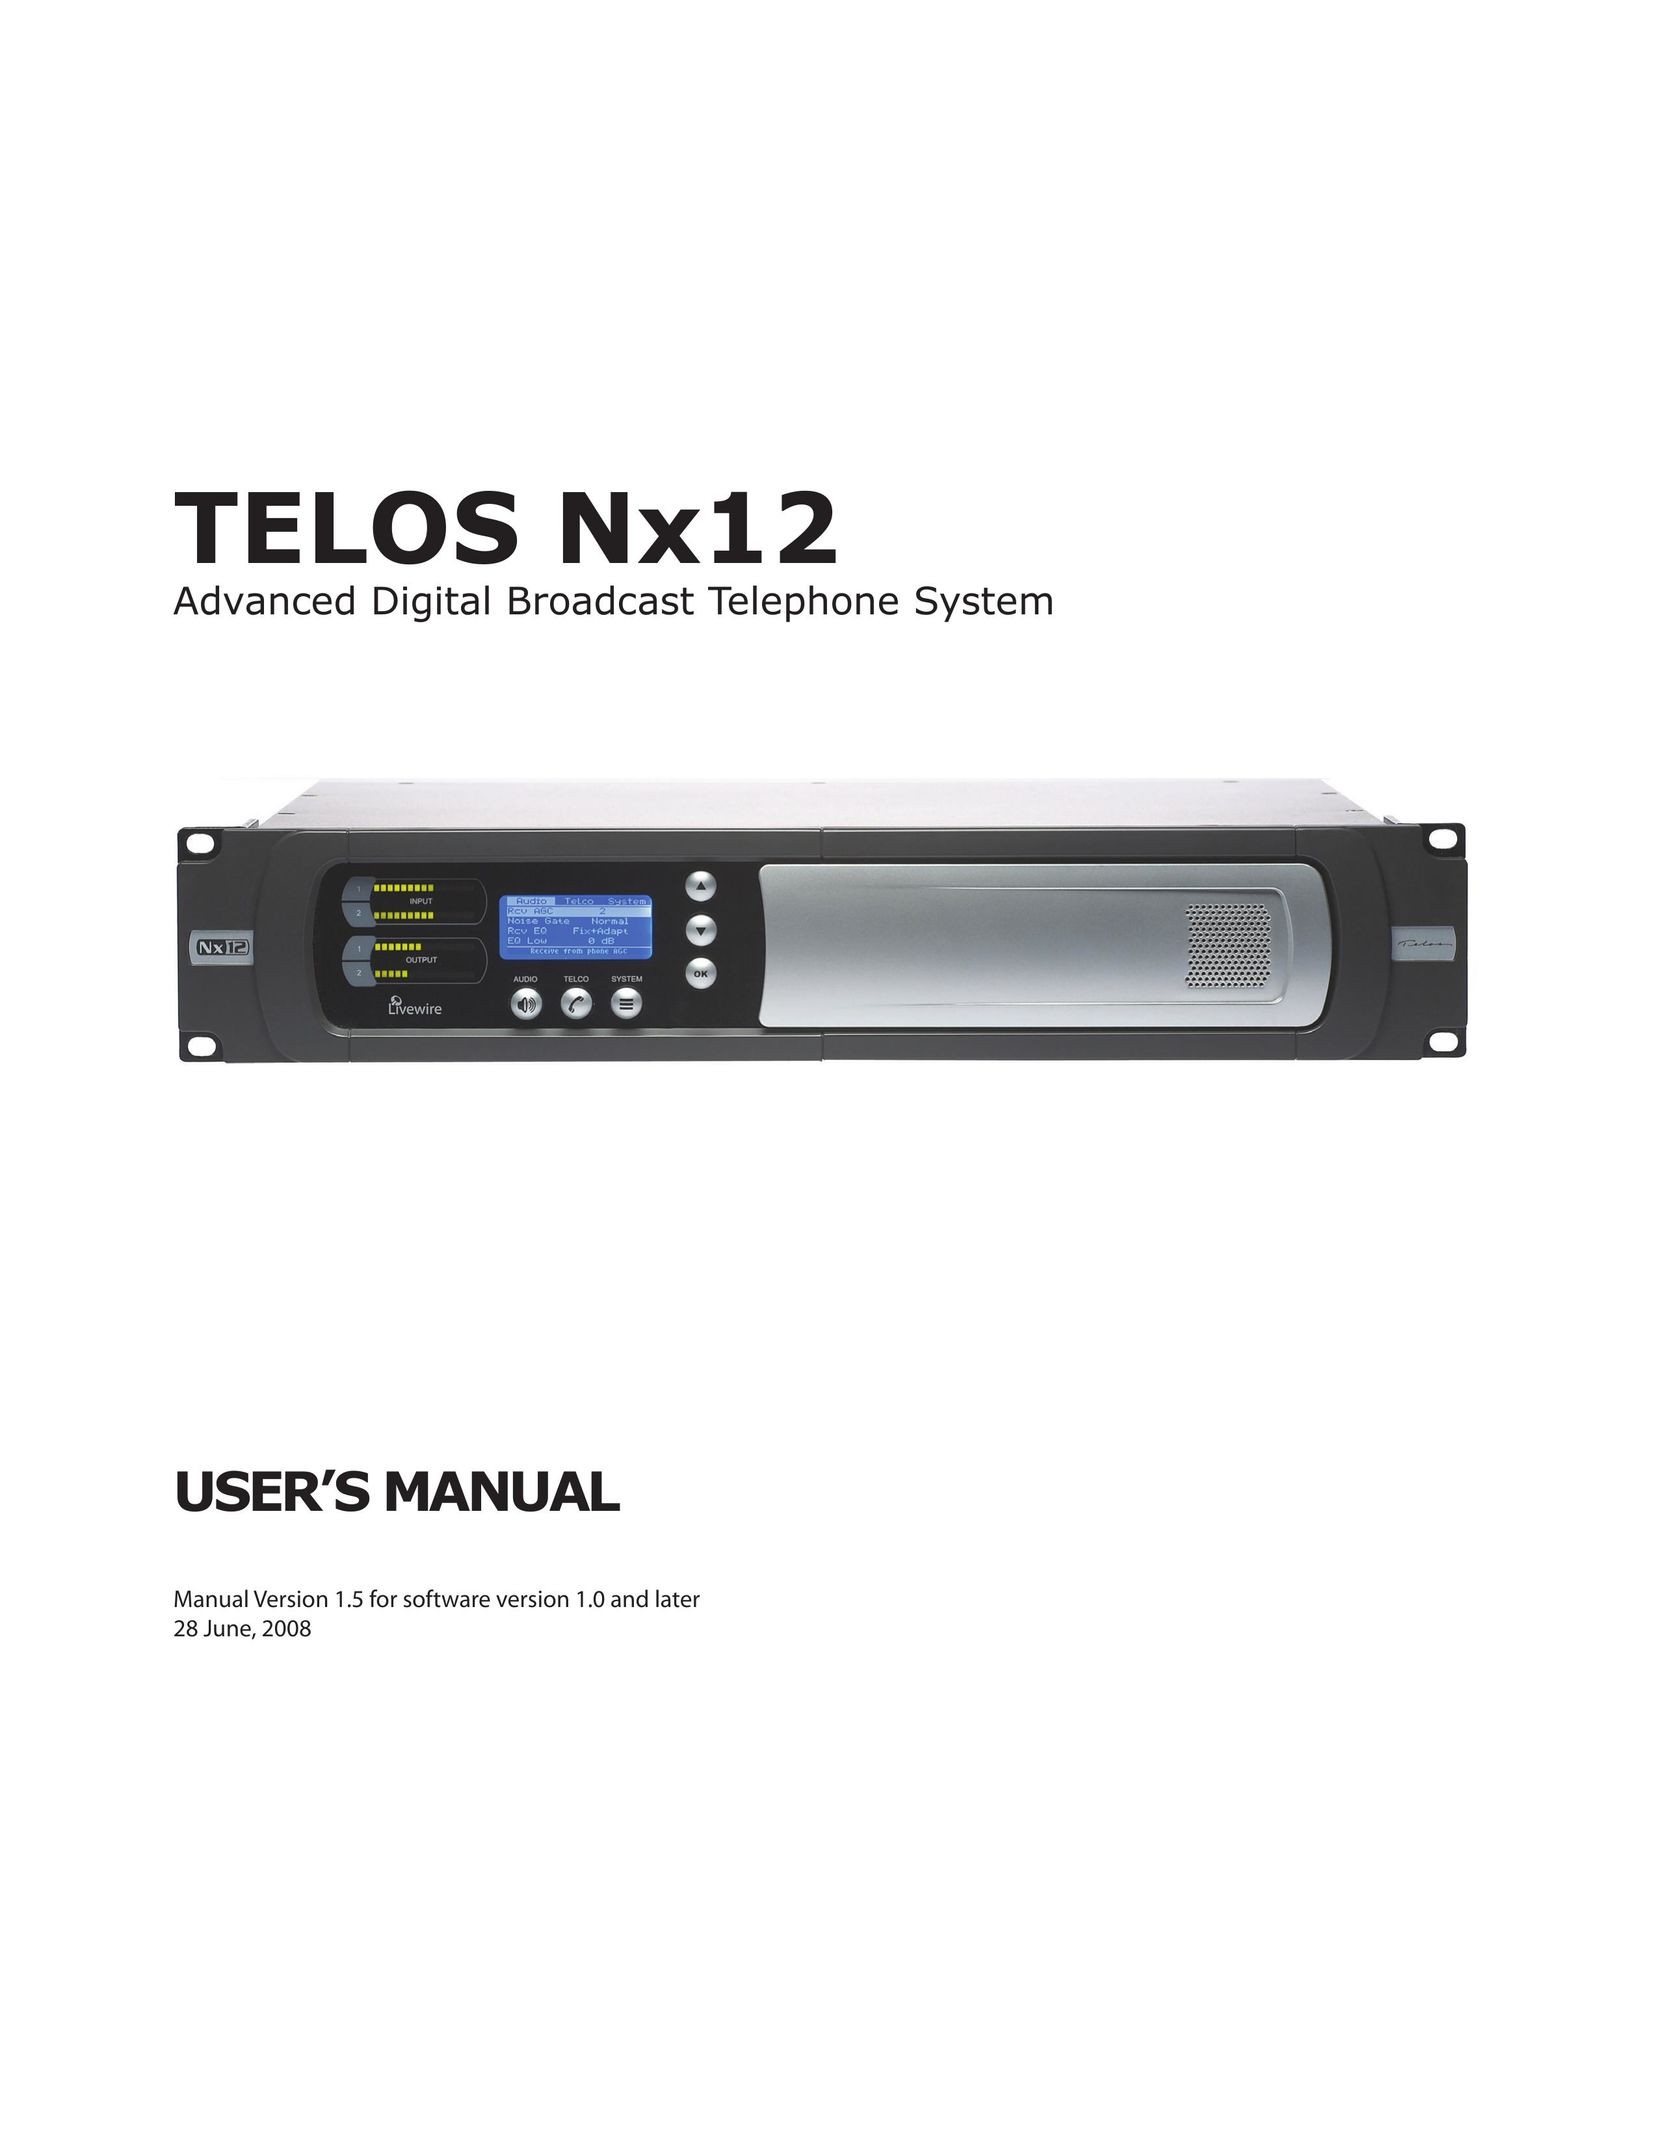 Telos NX12 Cell Phone User Manual